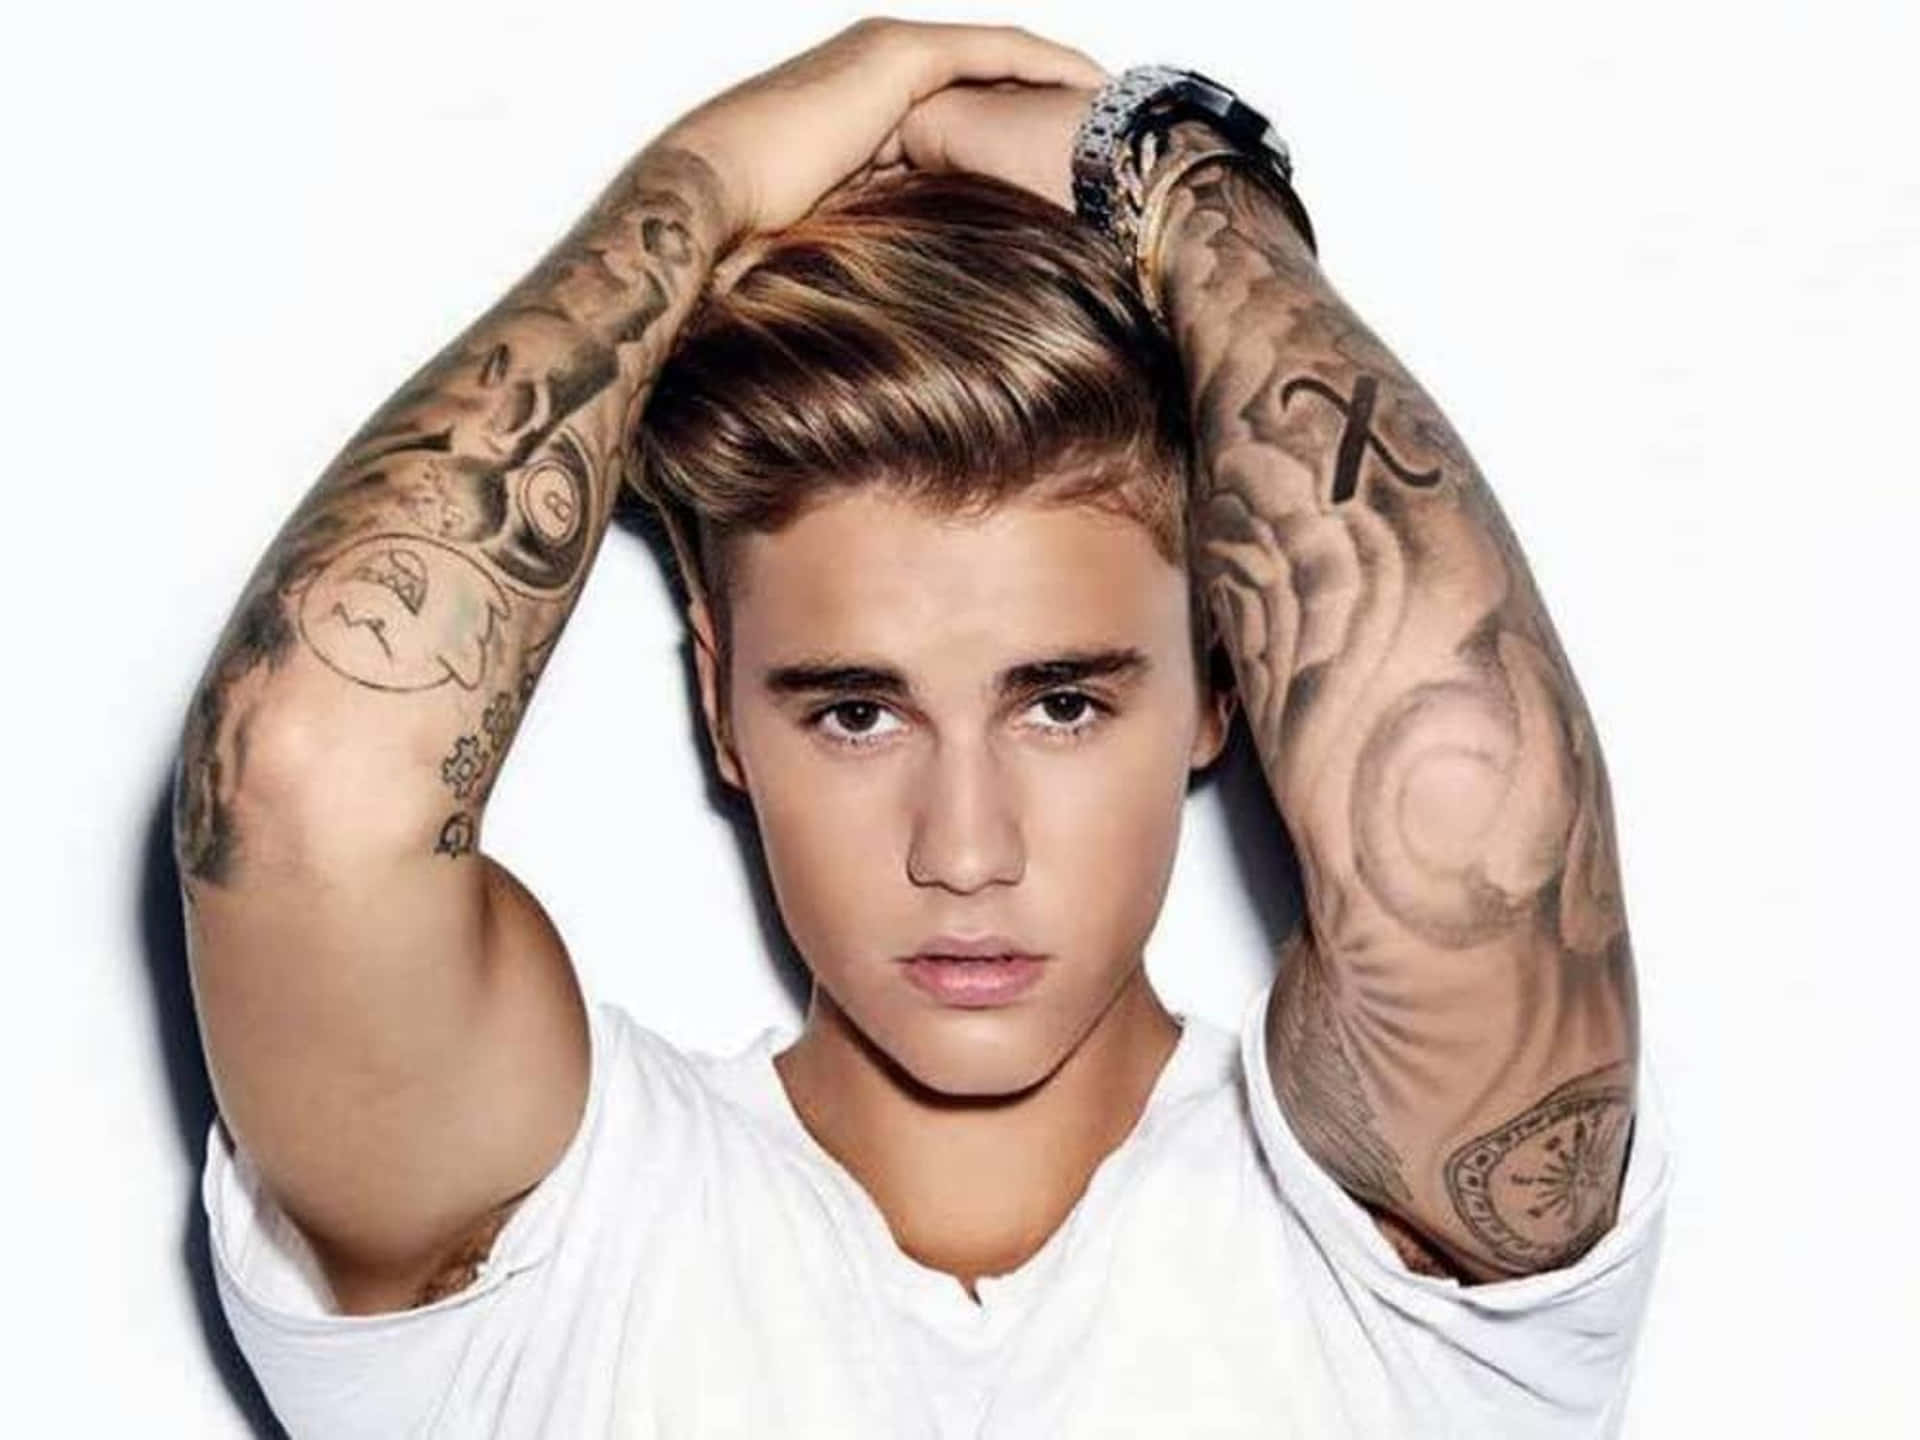 Tattooed Justin Bieber 2015 Background